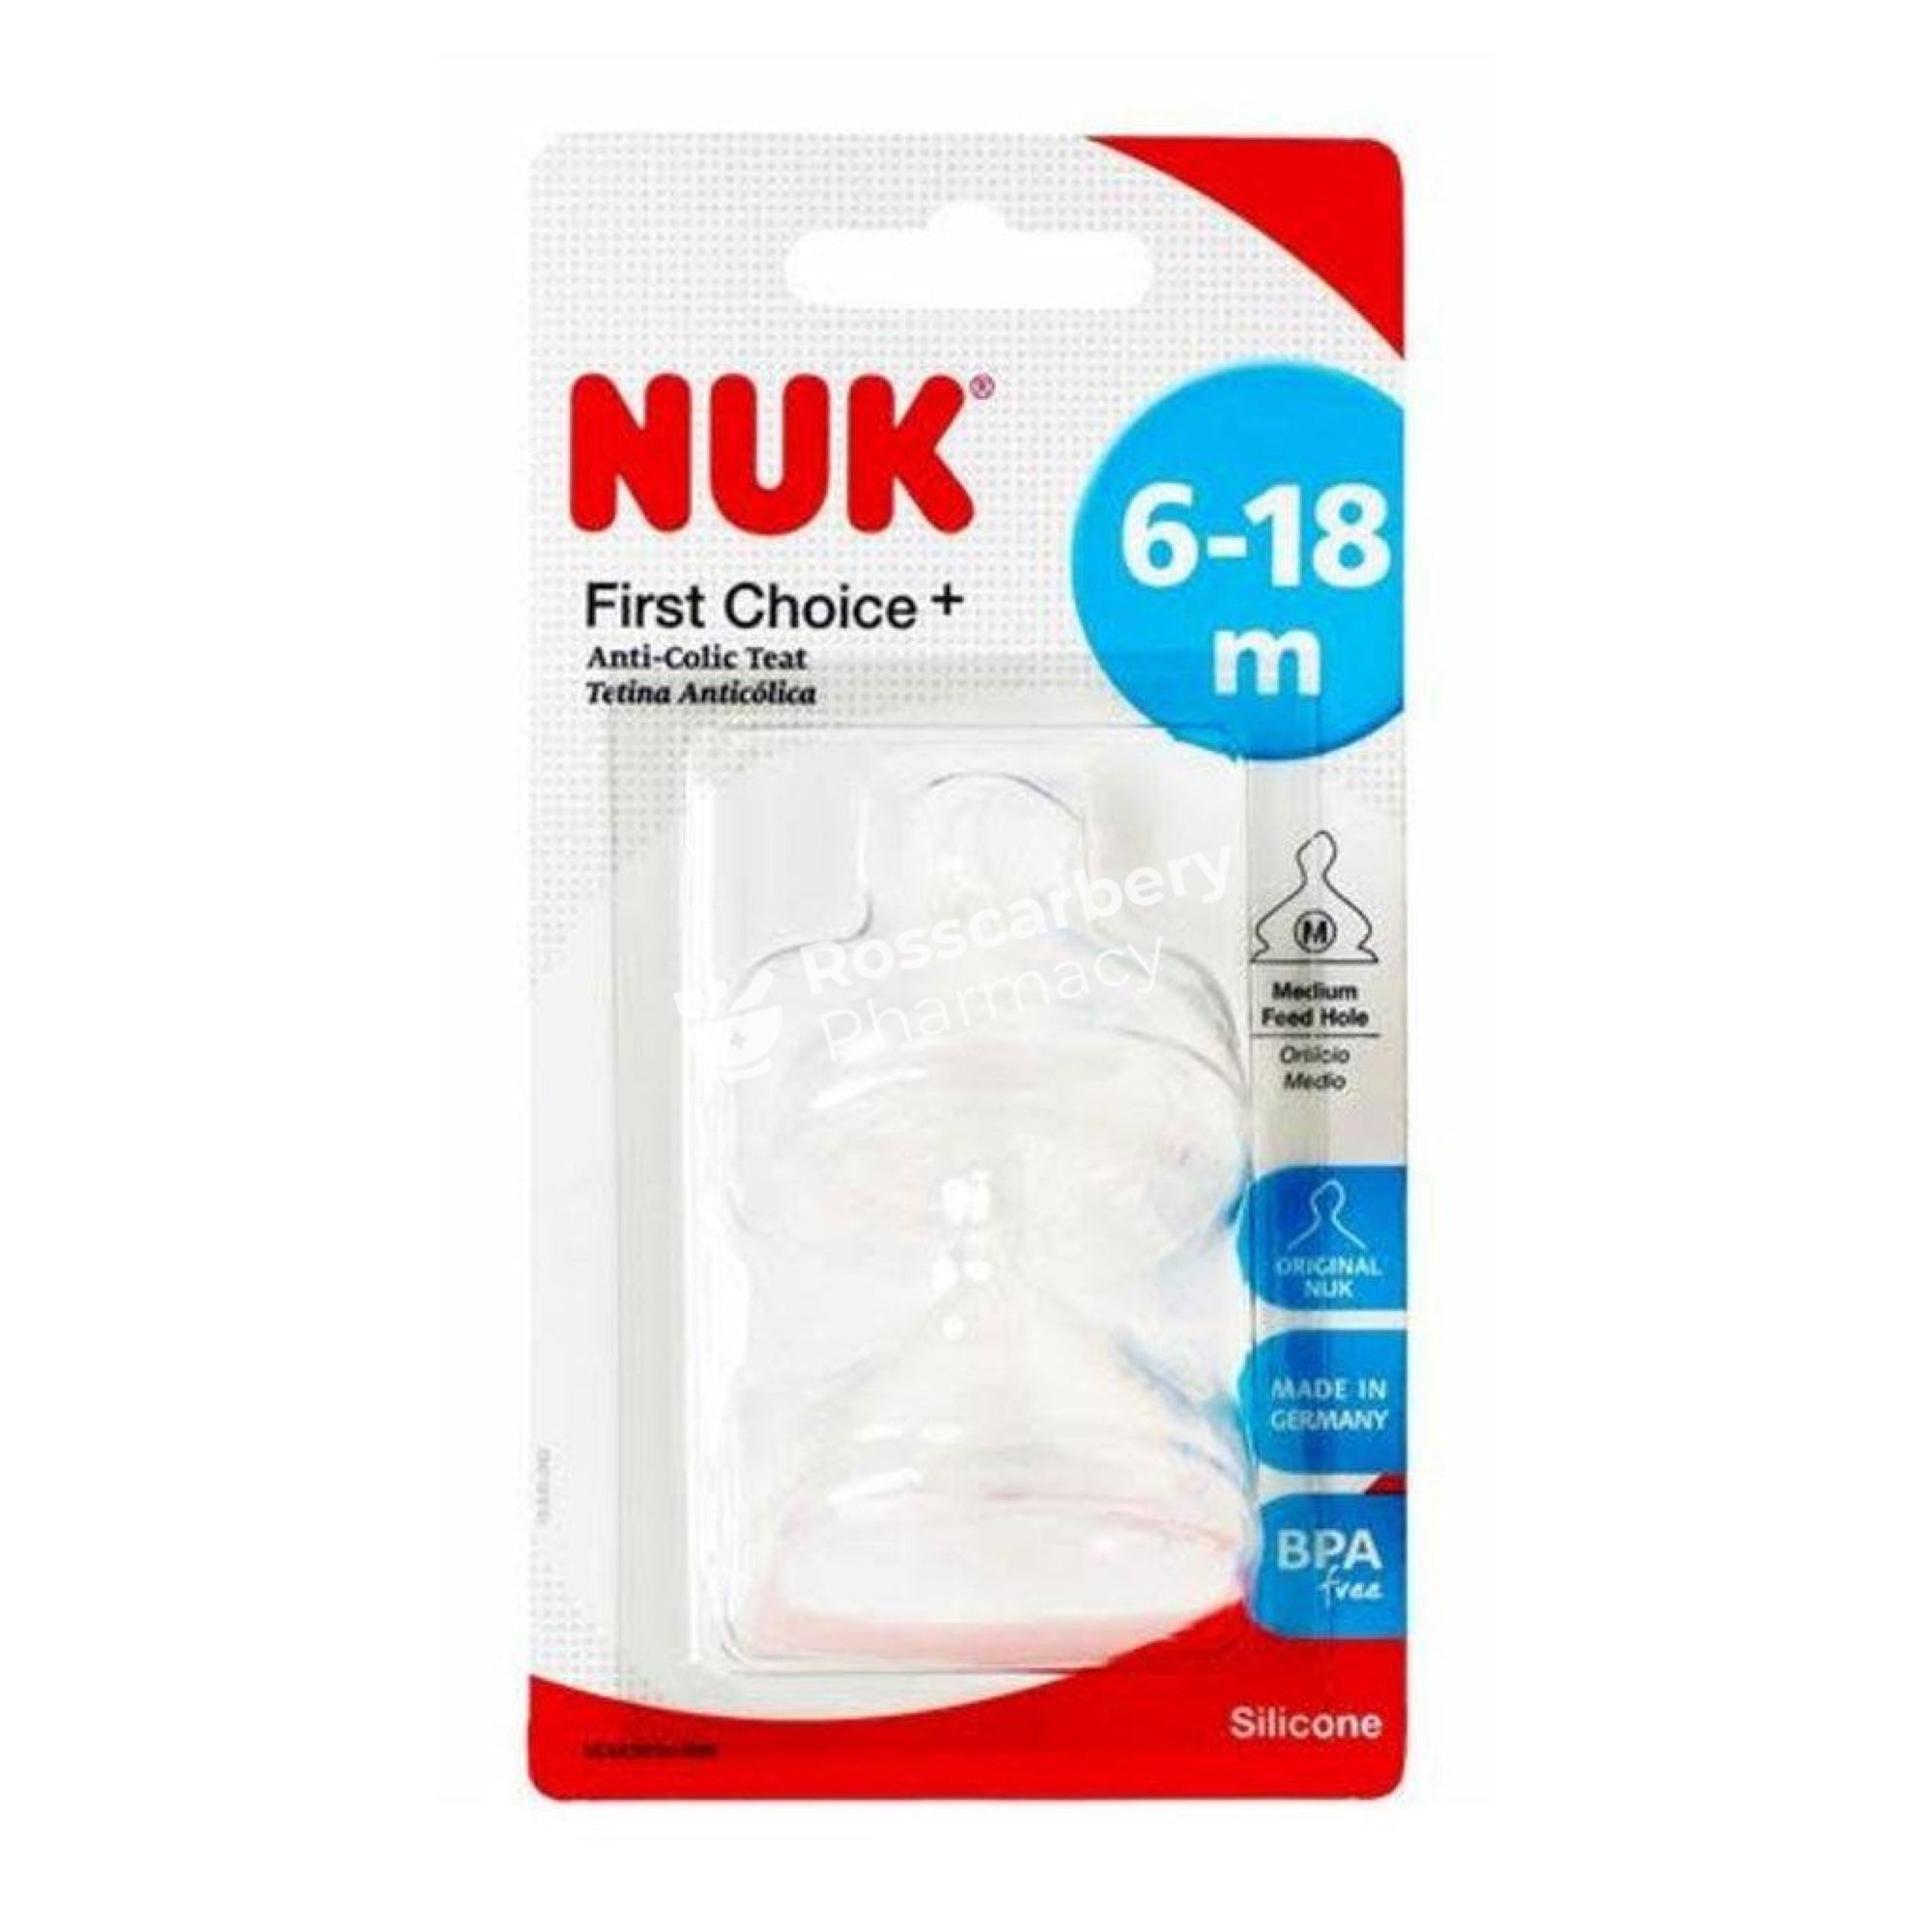 Nuk First Choice+ Anti-Colic Teat 6-18M Silicone Teats